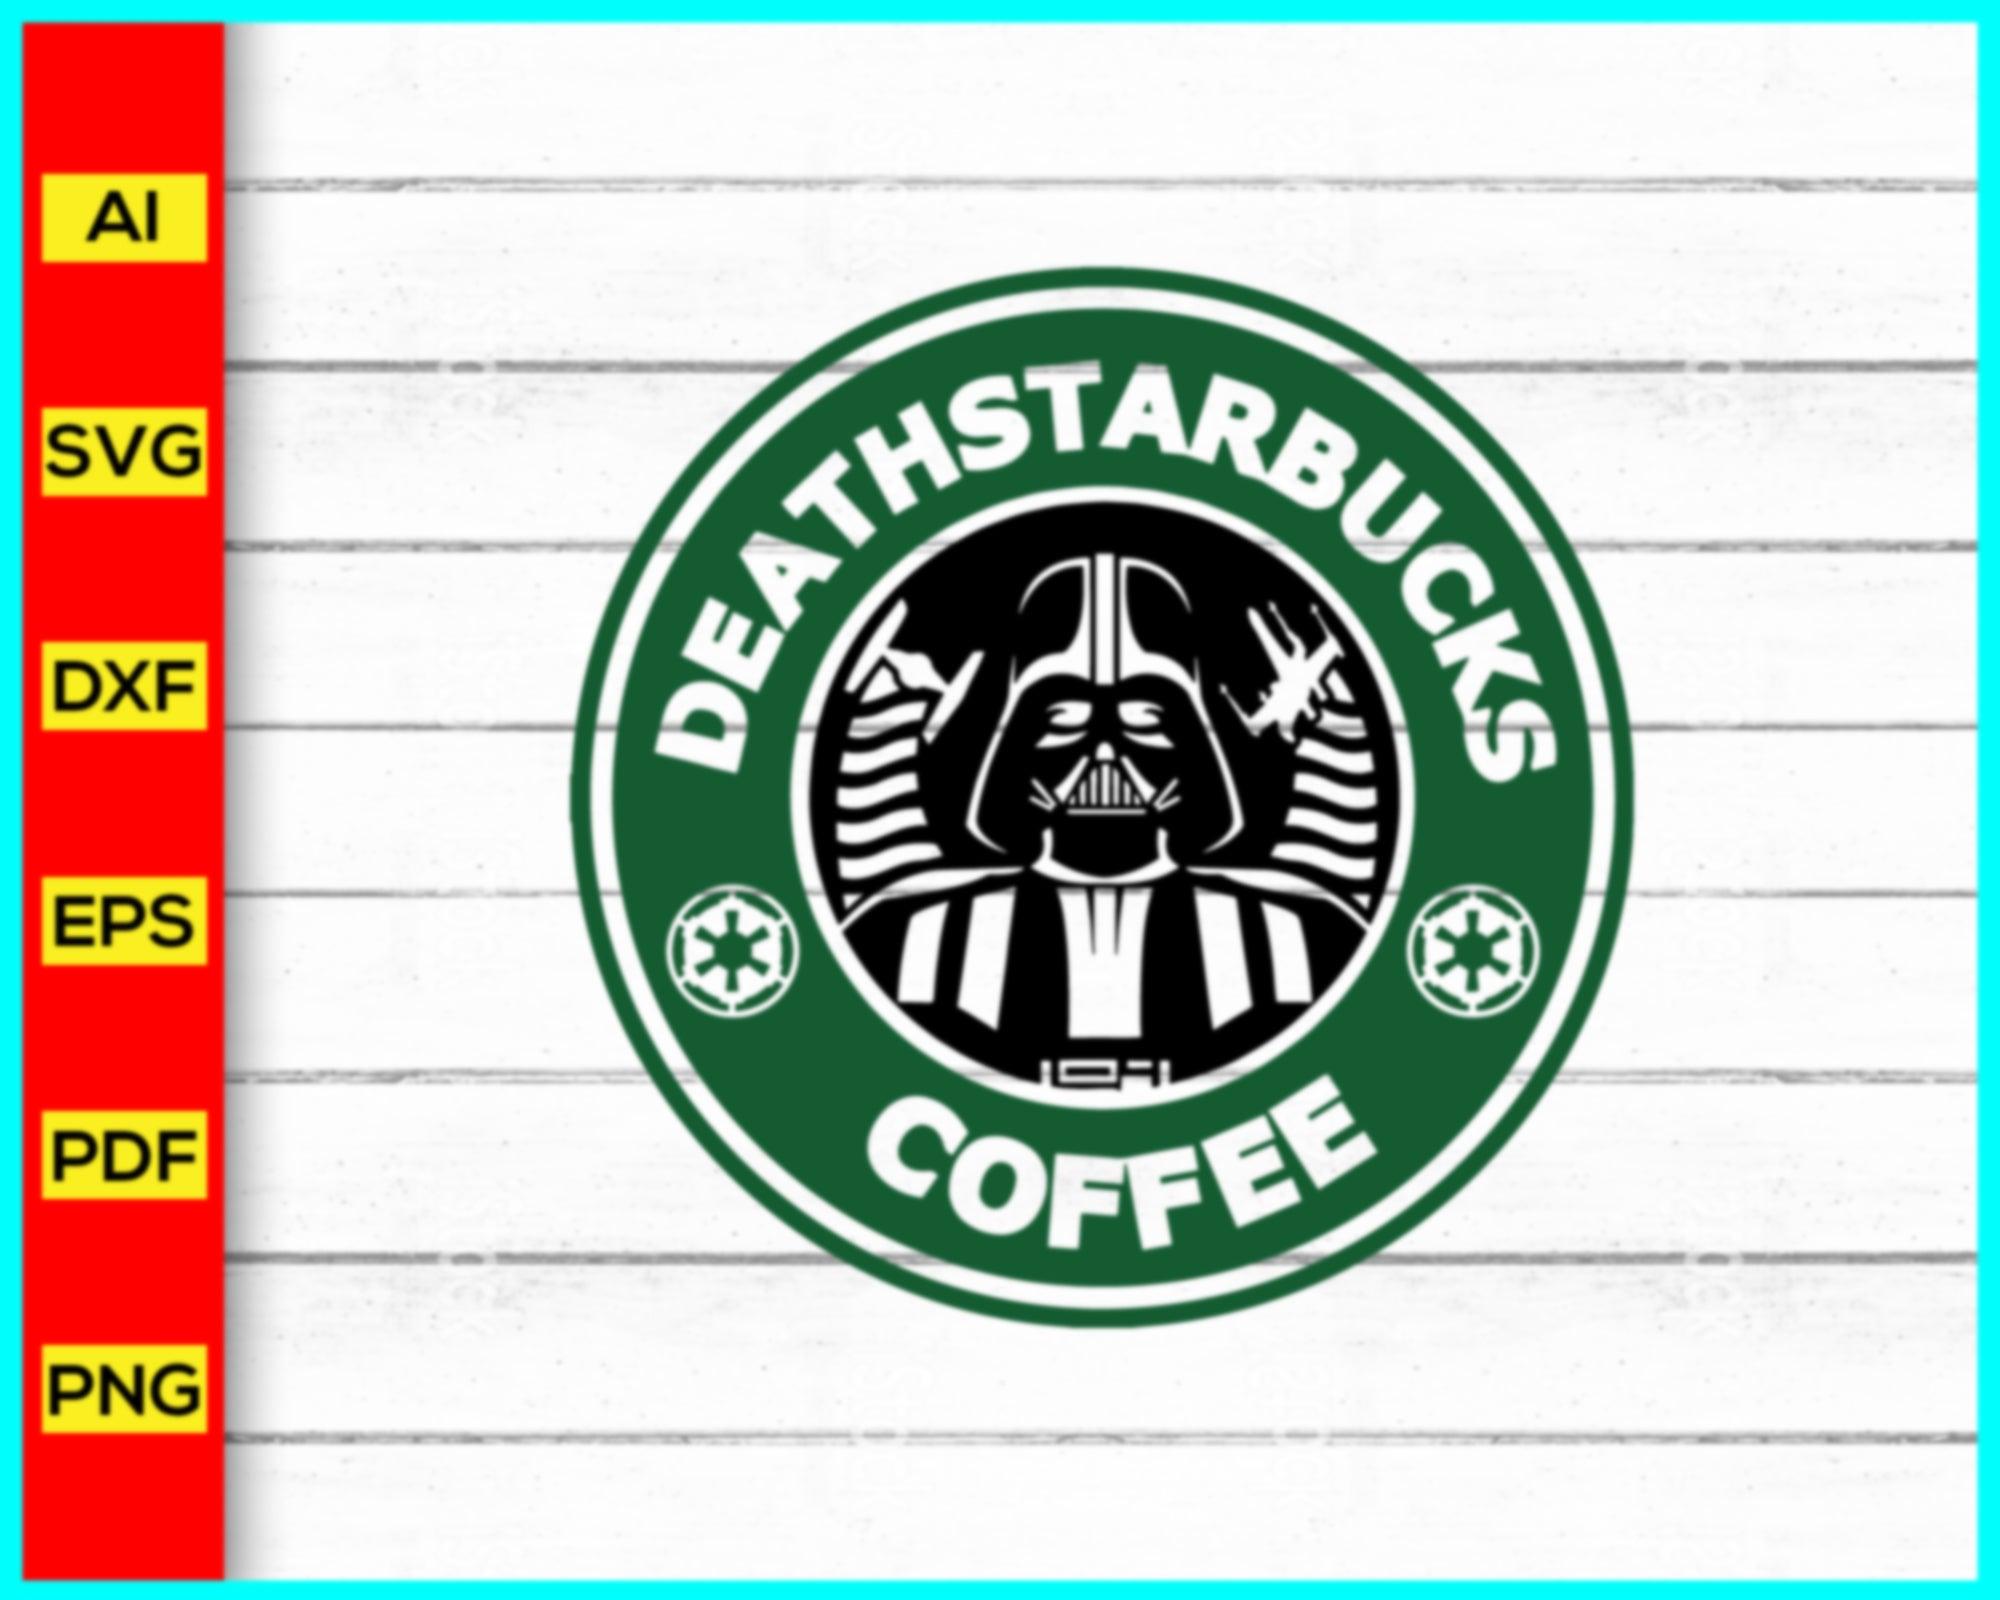 Death star coffee star wars SVG, Star wars starbuck logo SVG, Darth vader  SVG